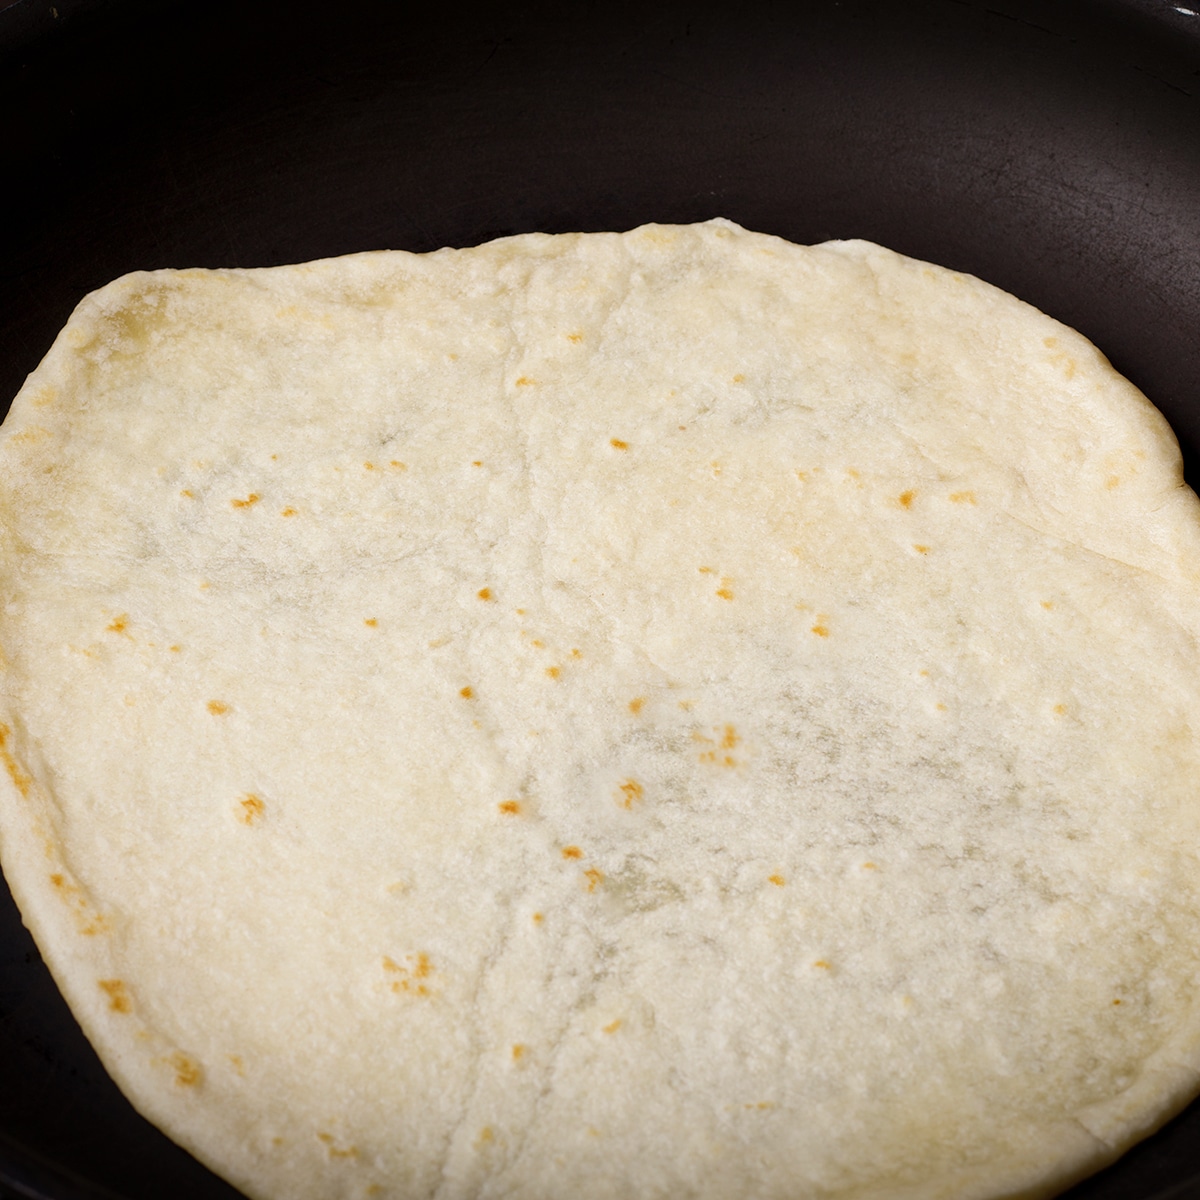 A homemade flour tortilla cooking in a skillet.